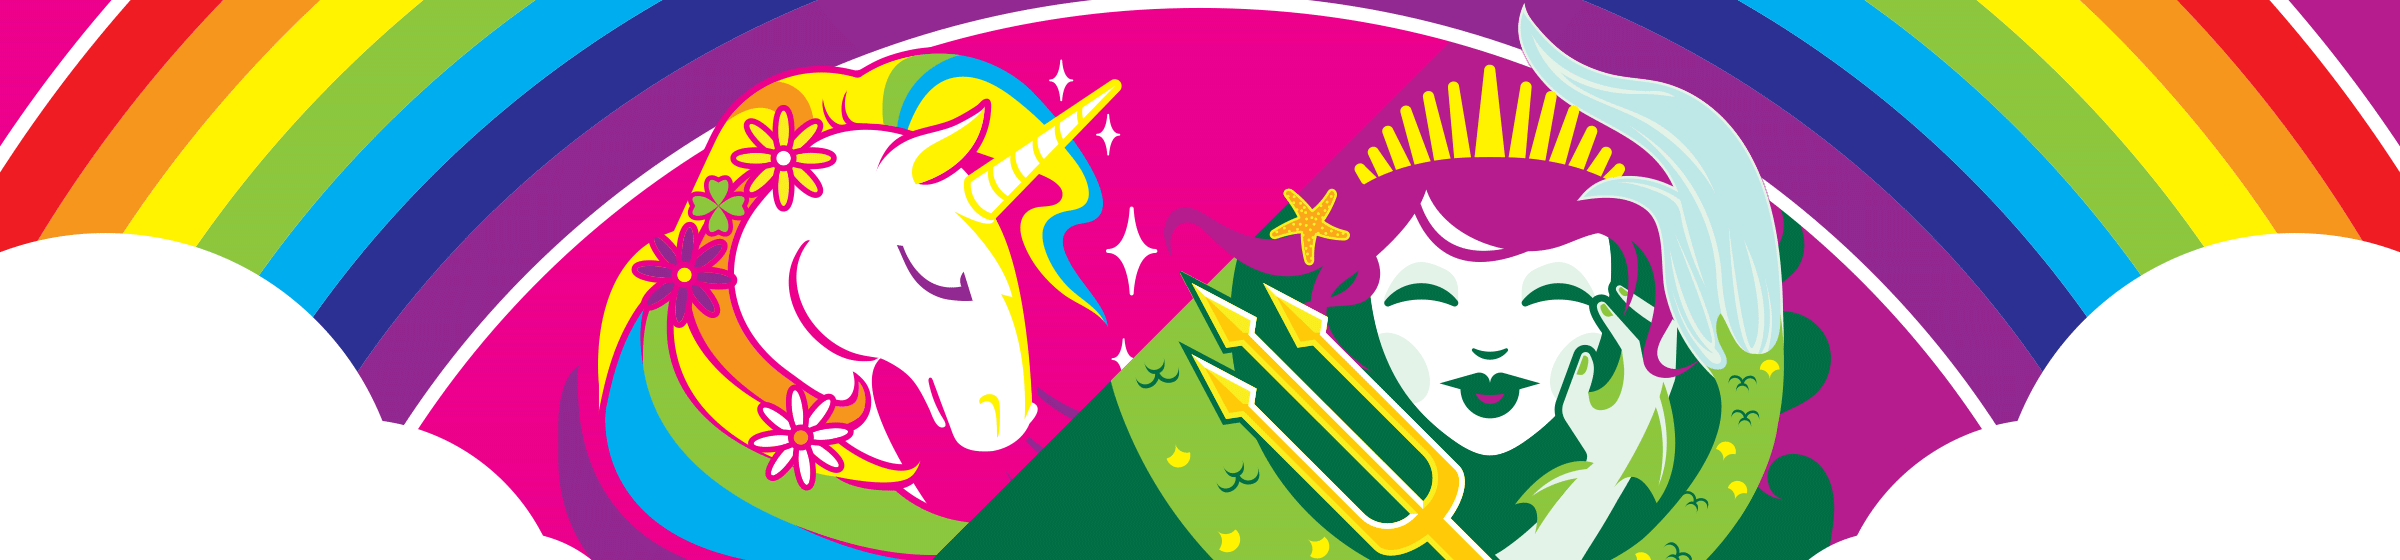 Unicorns VS Mermaids Game Cover Image